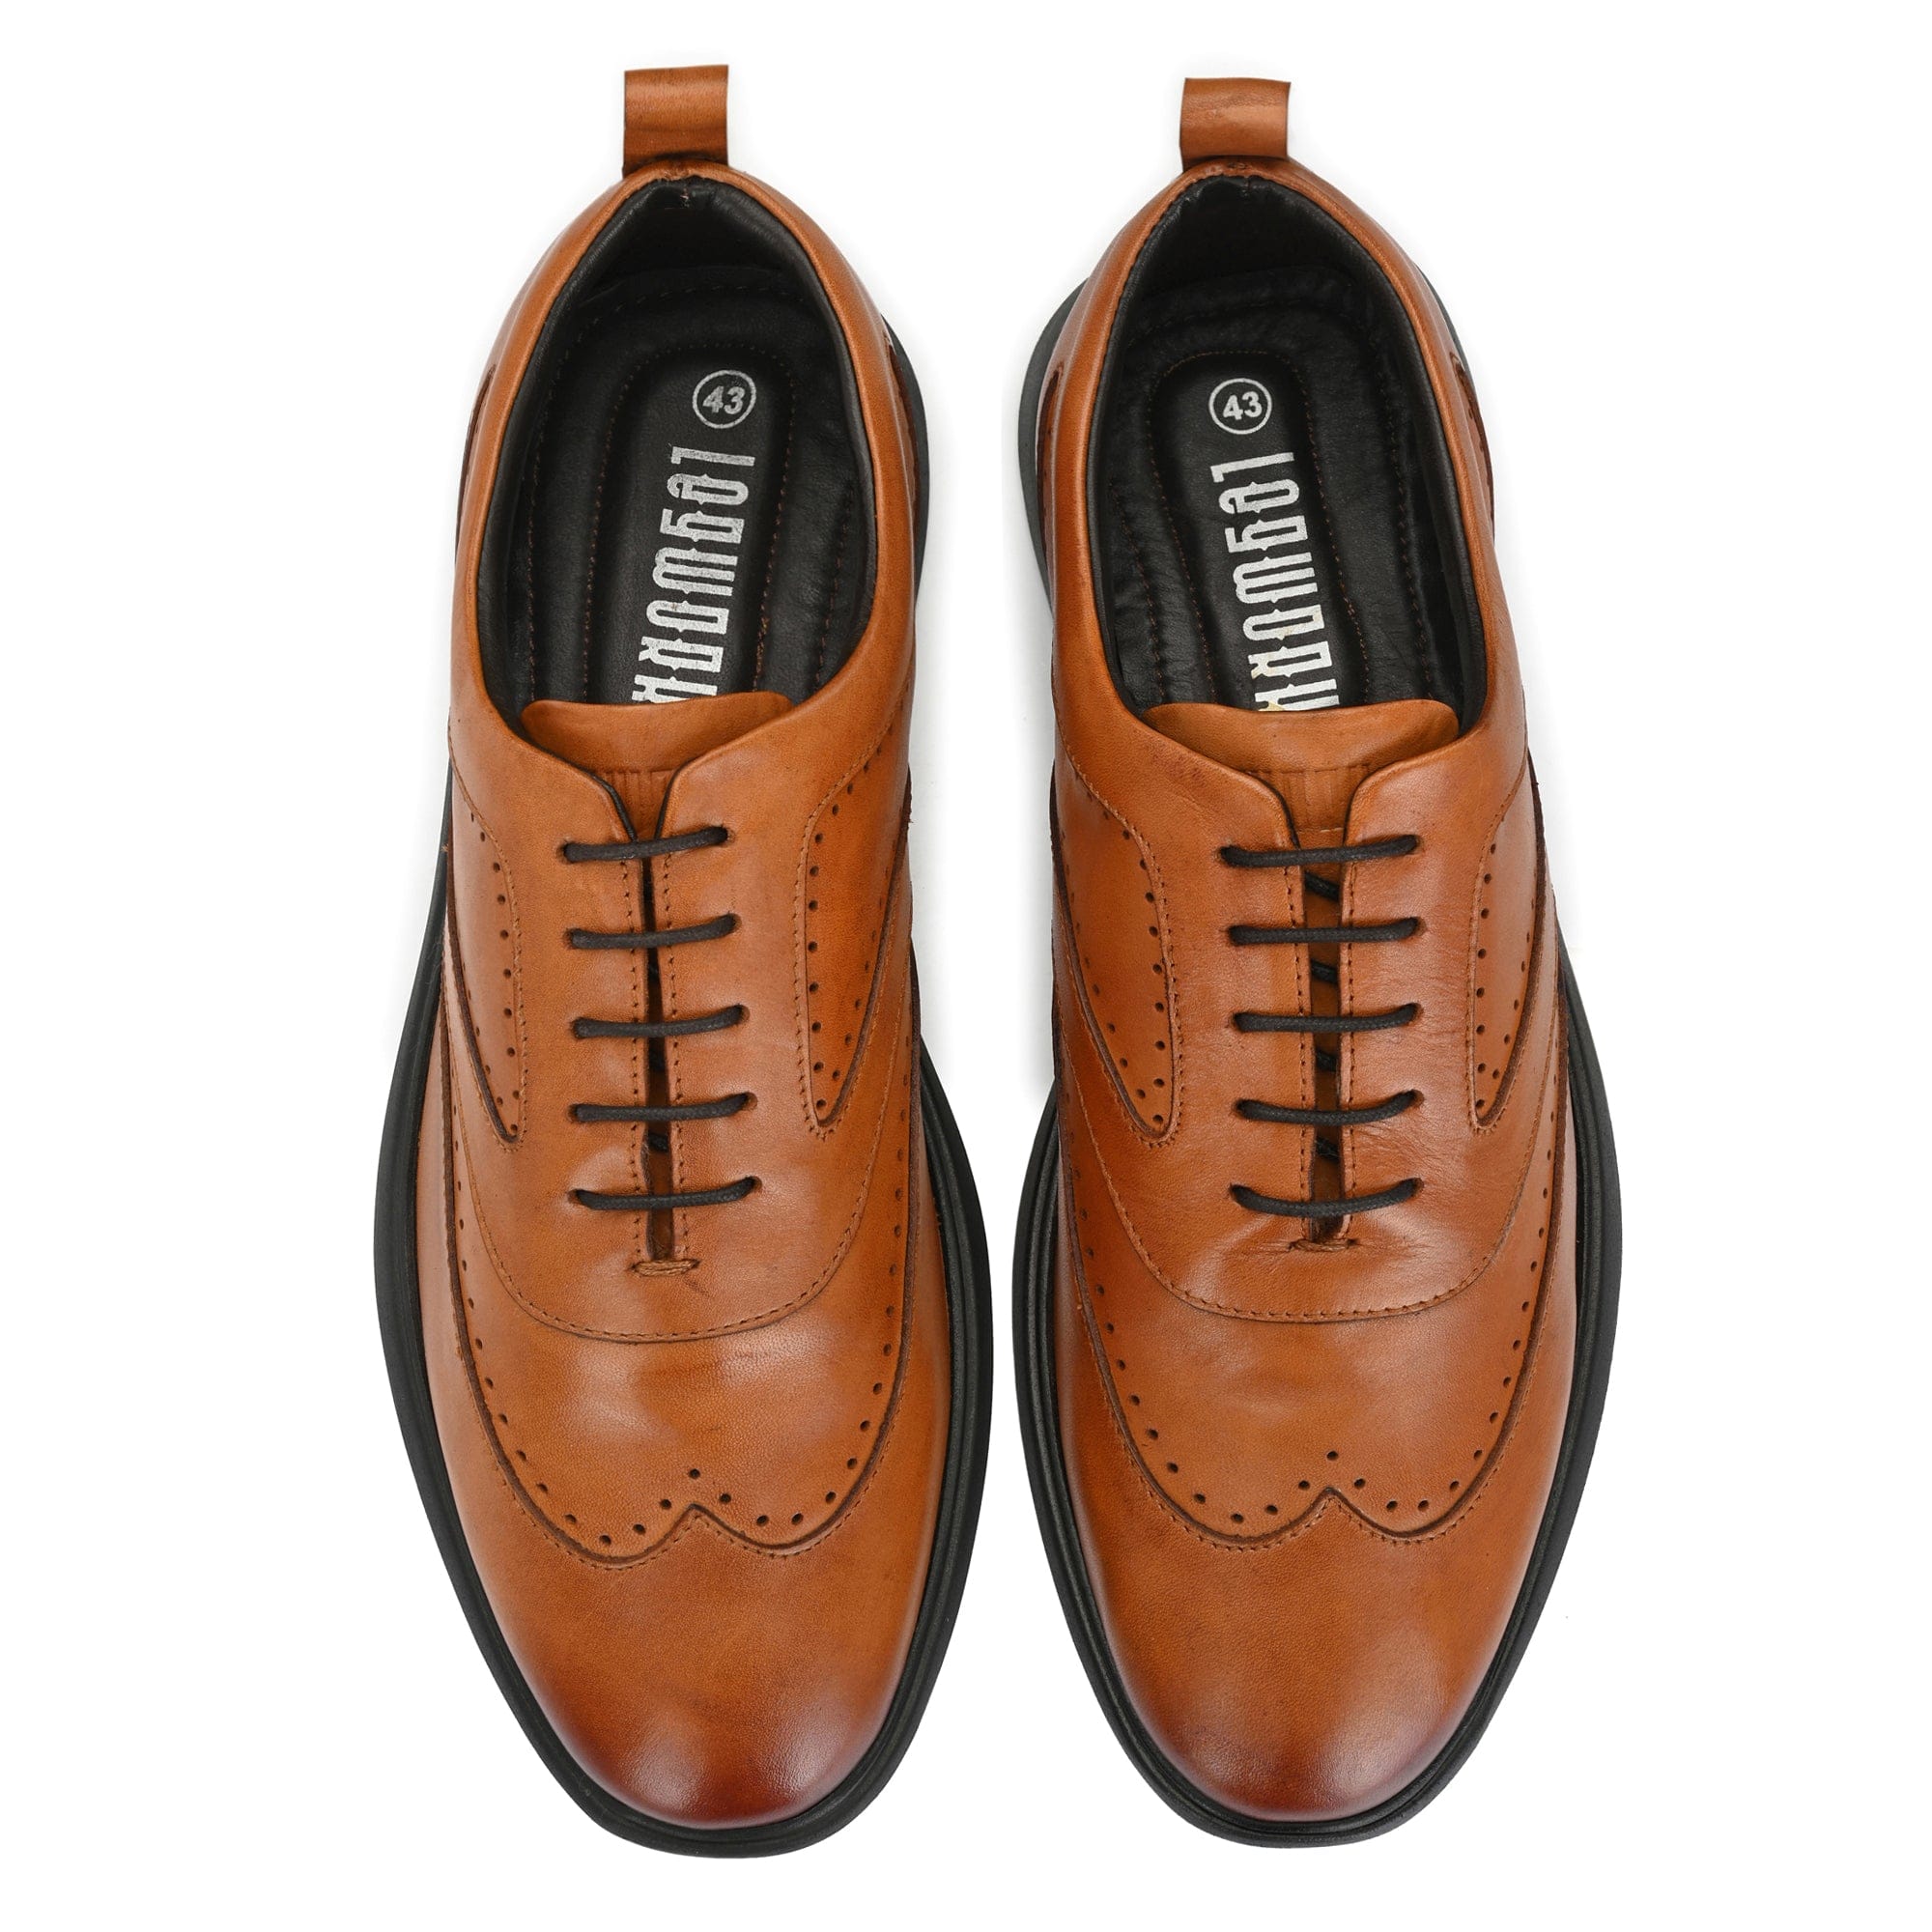 Legwork Shoes Classico Wingtip Oxford British Tan Full Grain Leather Sneaker